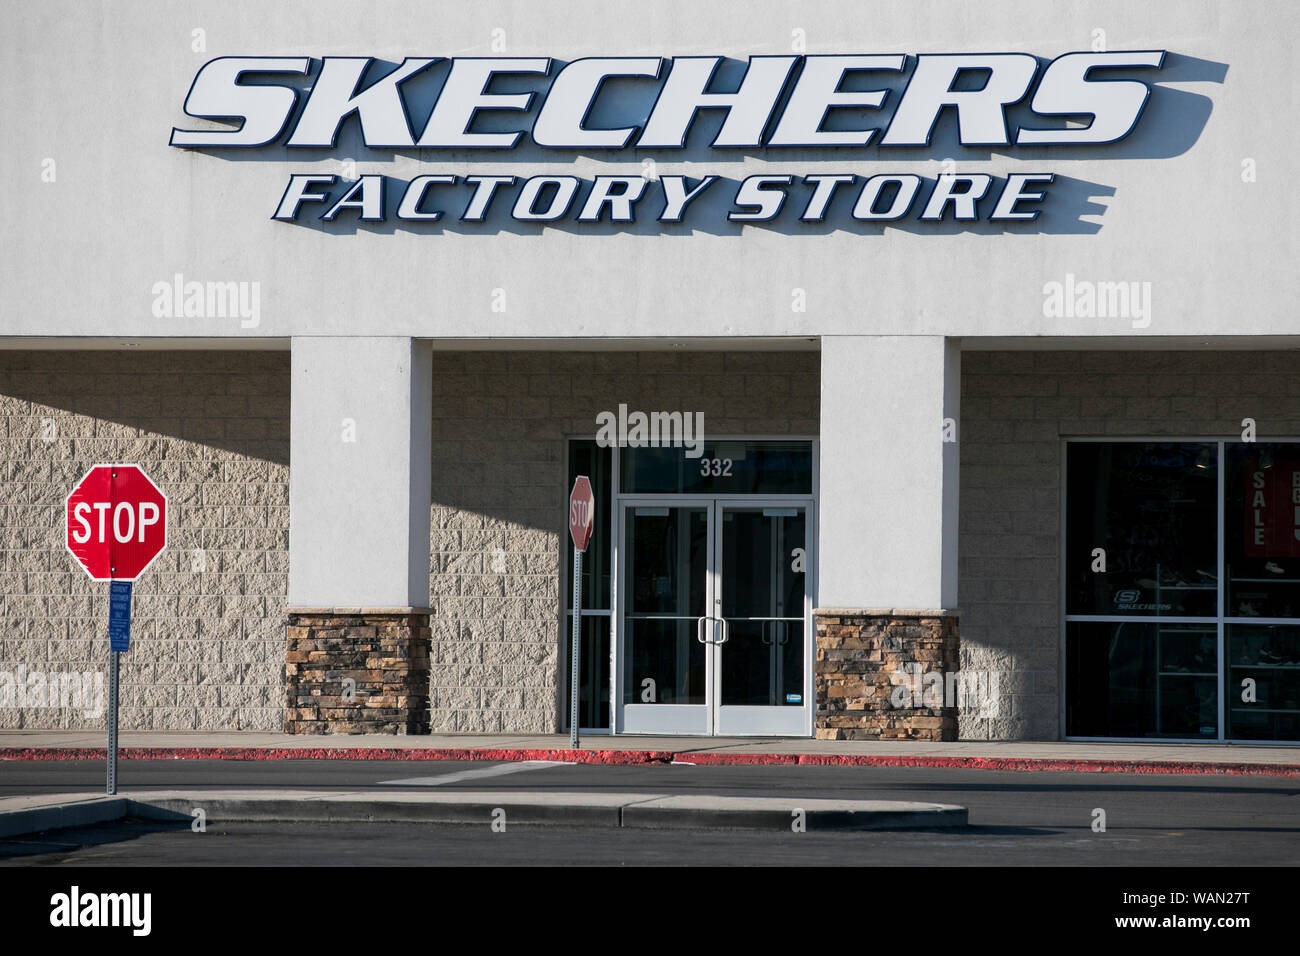 sketcher store locations